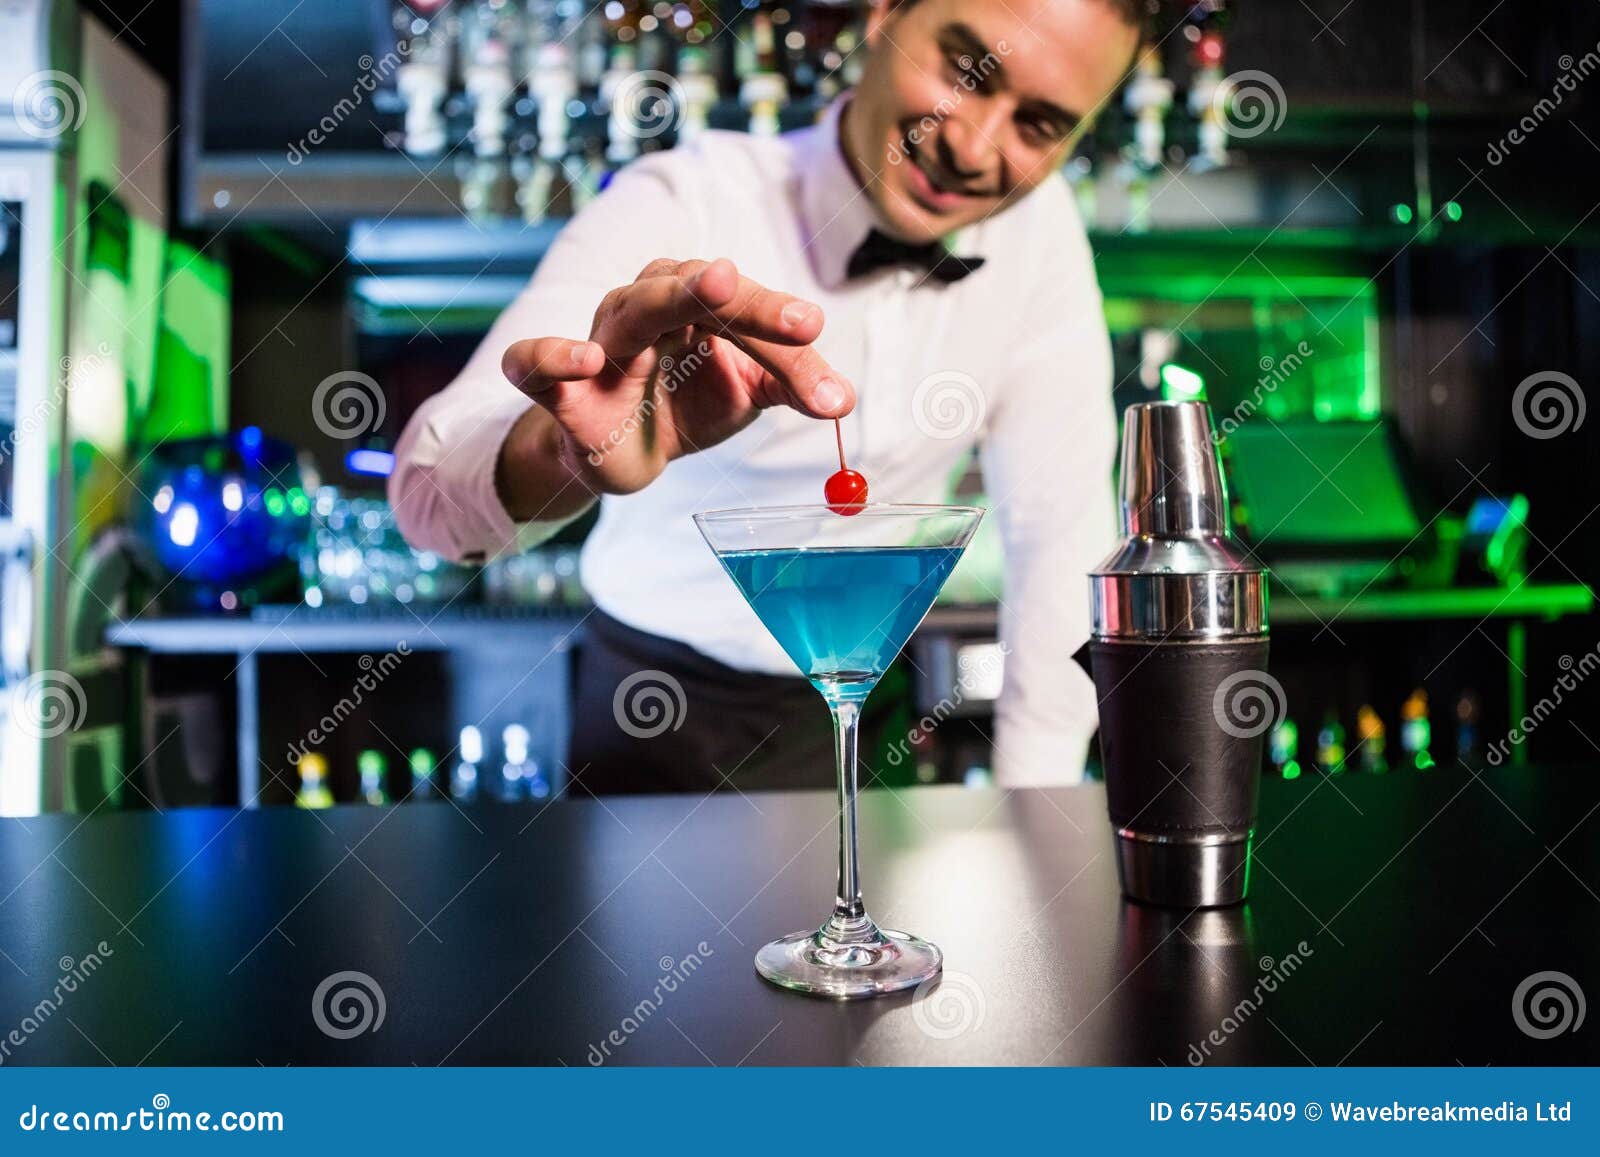 bartender garnishing cocktail with cherry